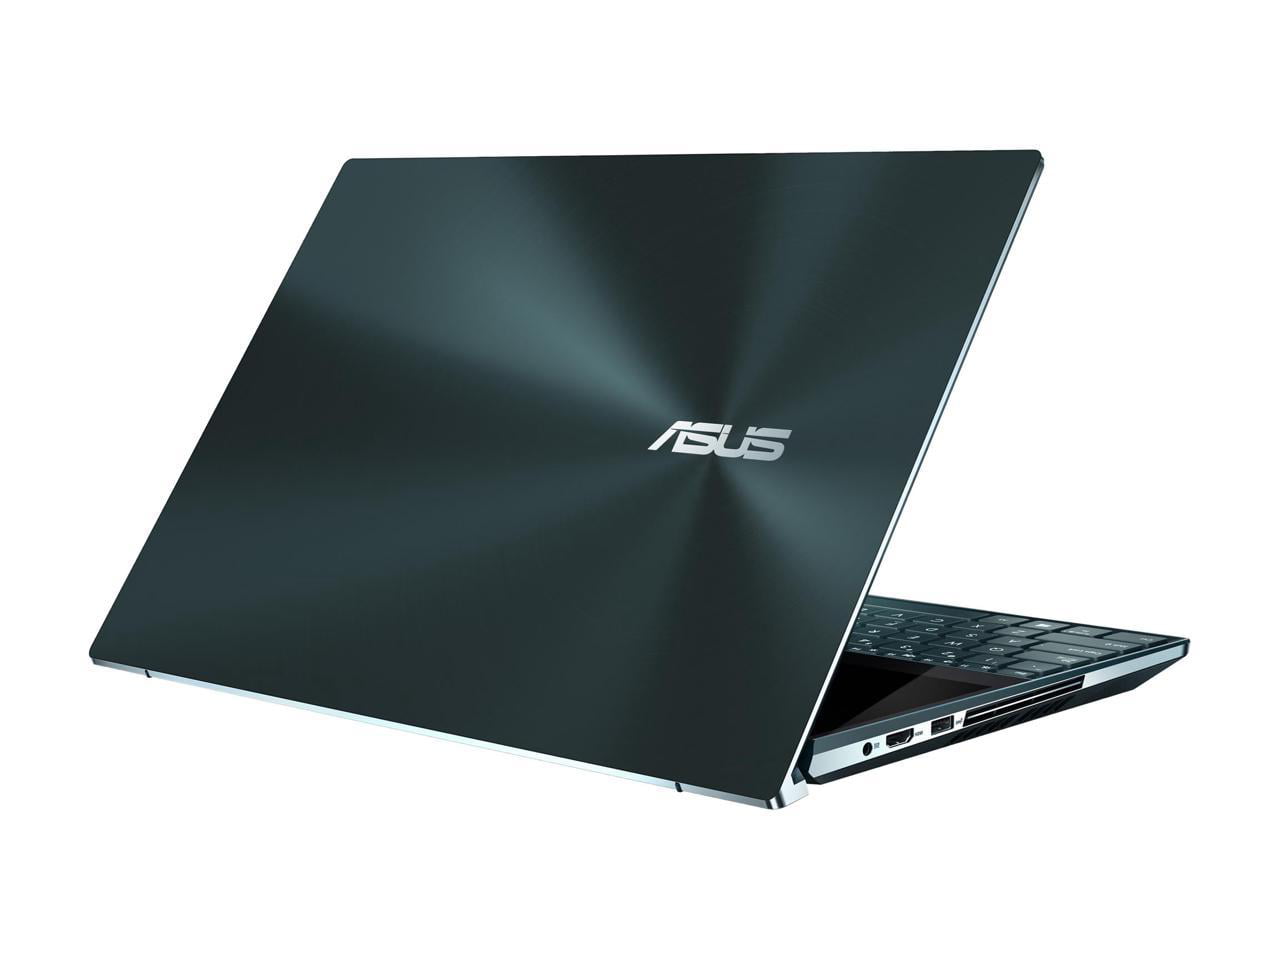 Gå rundt Lave Ferie ASUS ZenBook Pro Duo Laptop (Intel i9-9980HK 8-Core, 32GB RAM, 2TB m.2 SATA  SSD, 15.6" Touch 4K UHD (3840x2160), NVIDIA RTX 2060, Wifi, Bluetooth,  Webcam, 1xHDMI, Win 10 Pro (Used) - Walmart.com